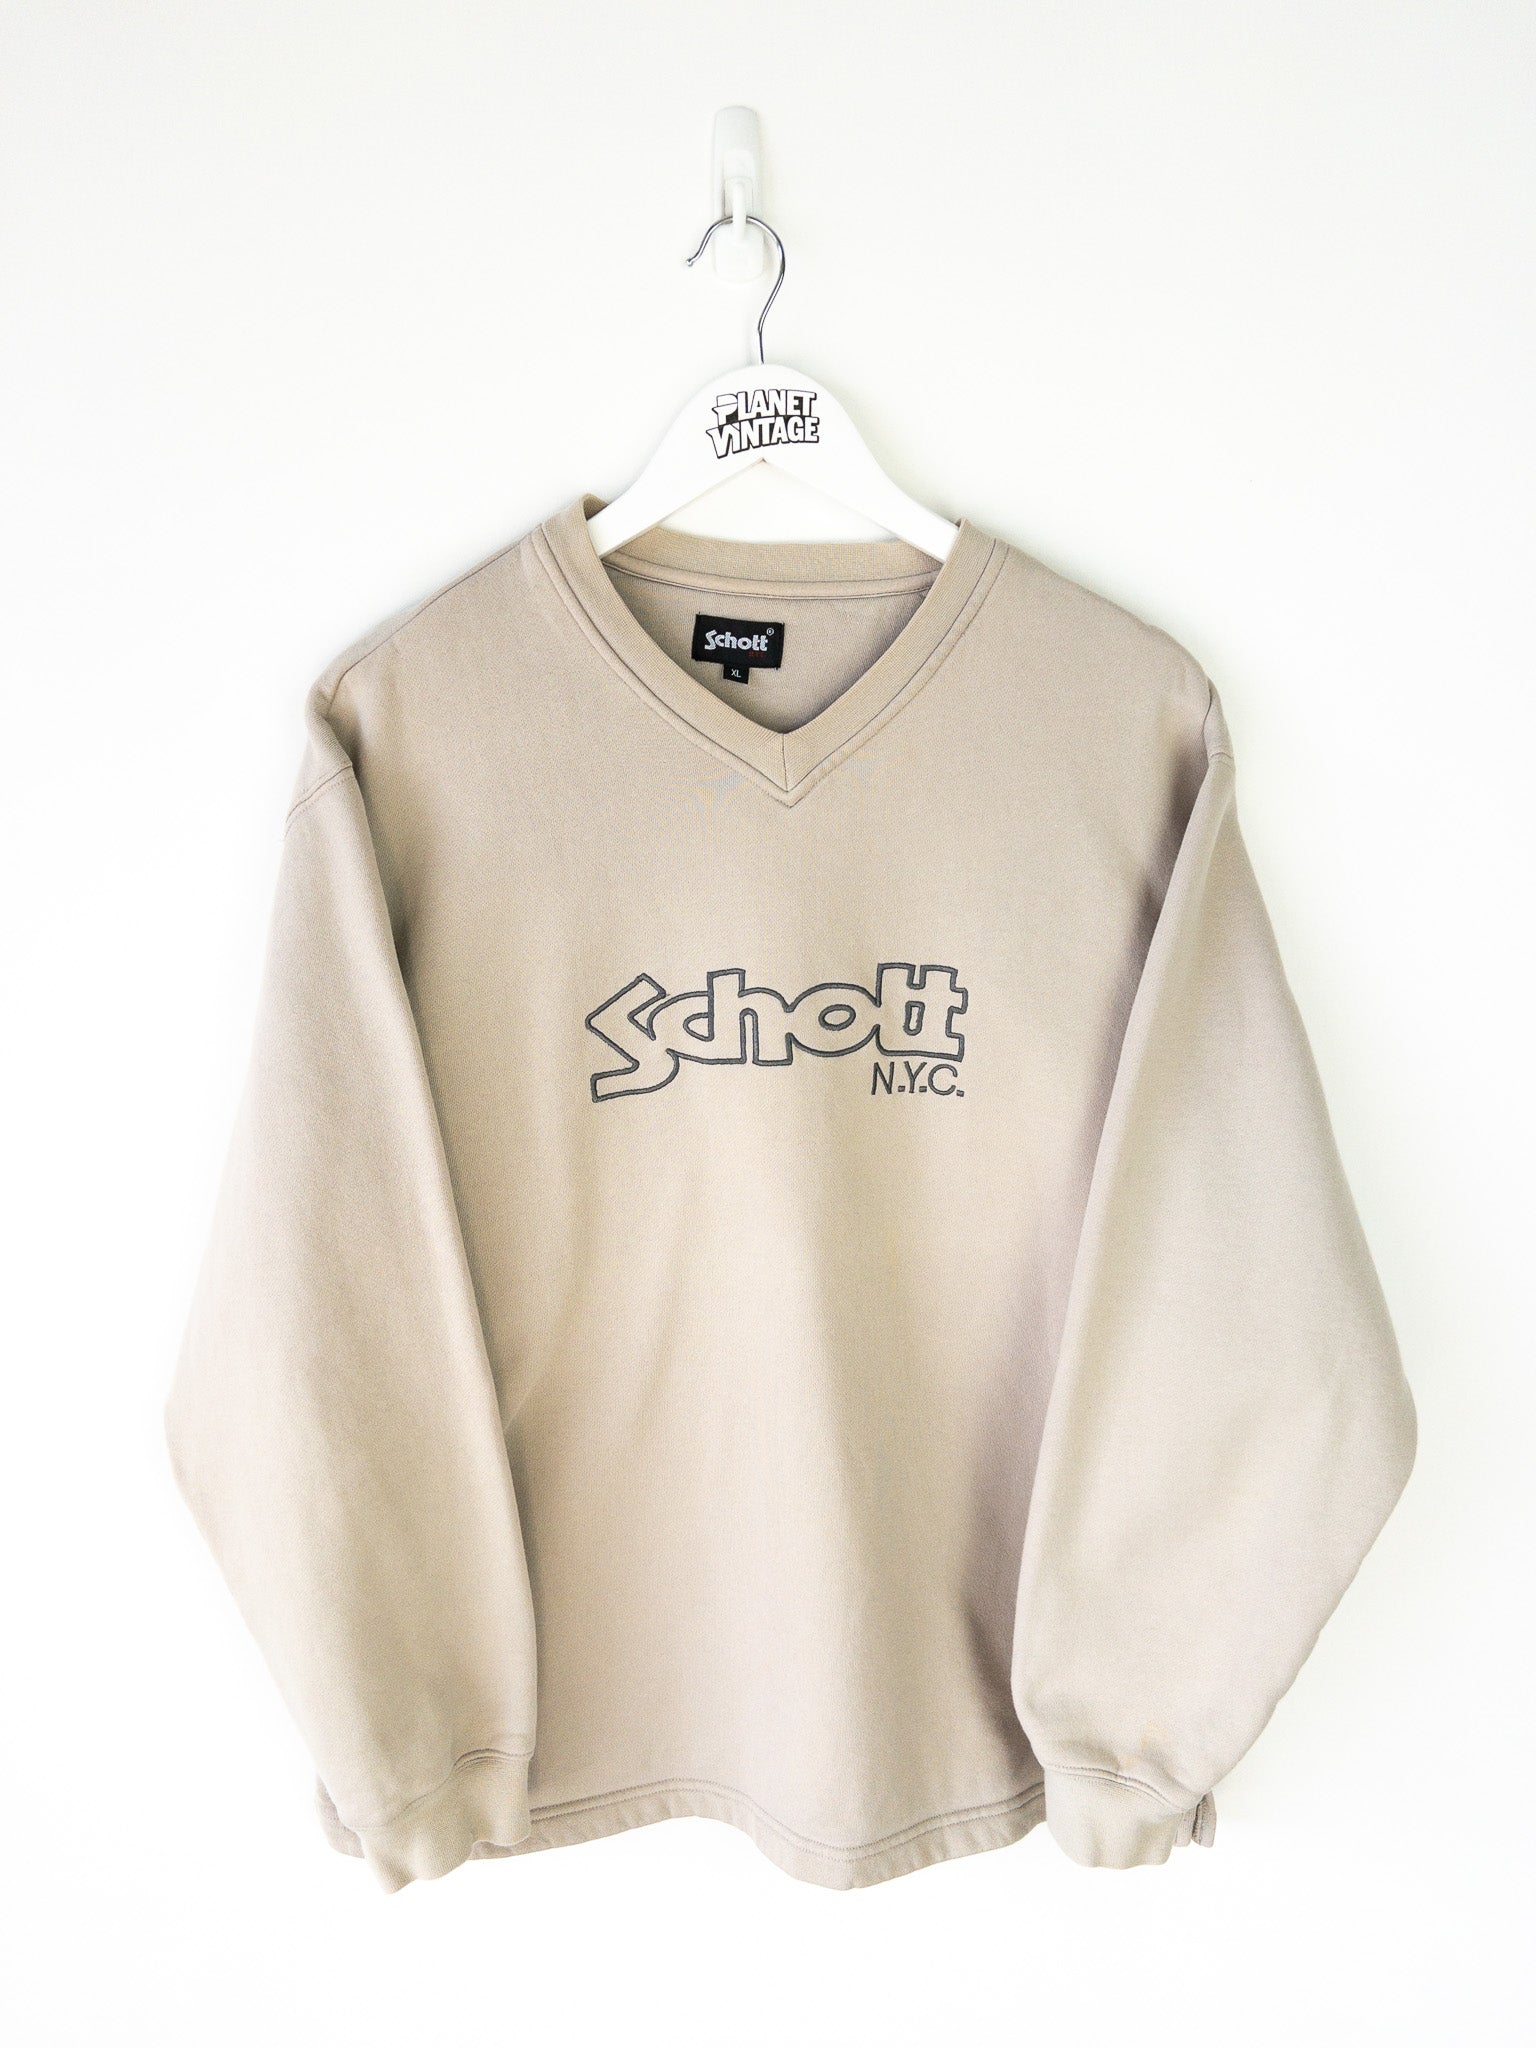 Vintage Schott N.Y.C Sweatshirt (XL)